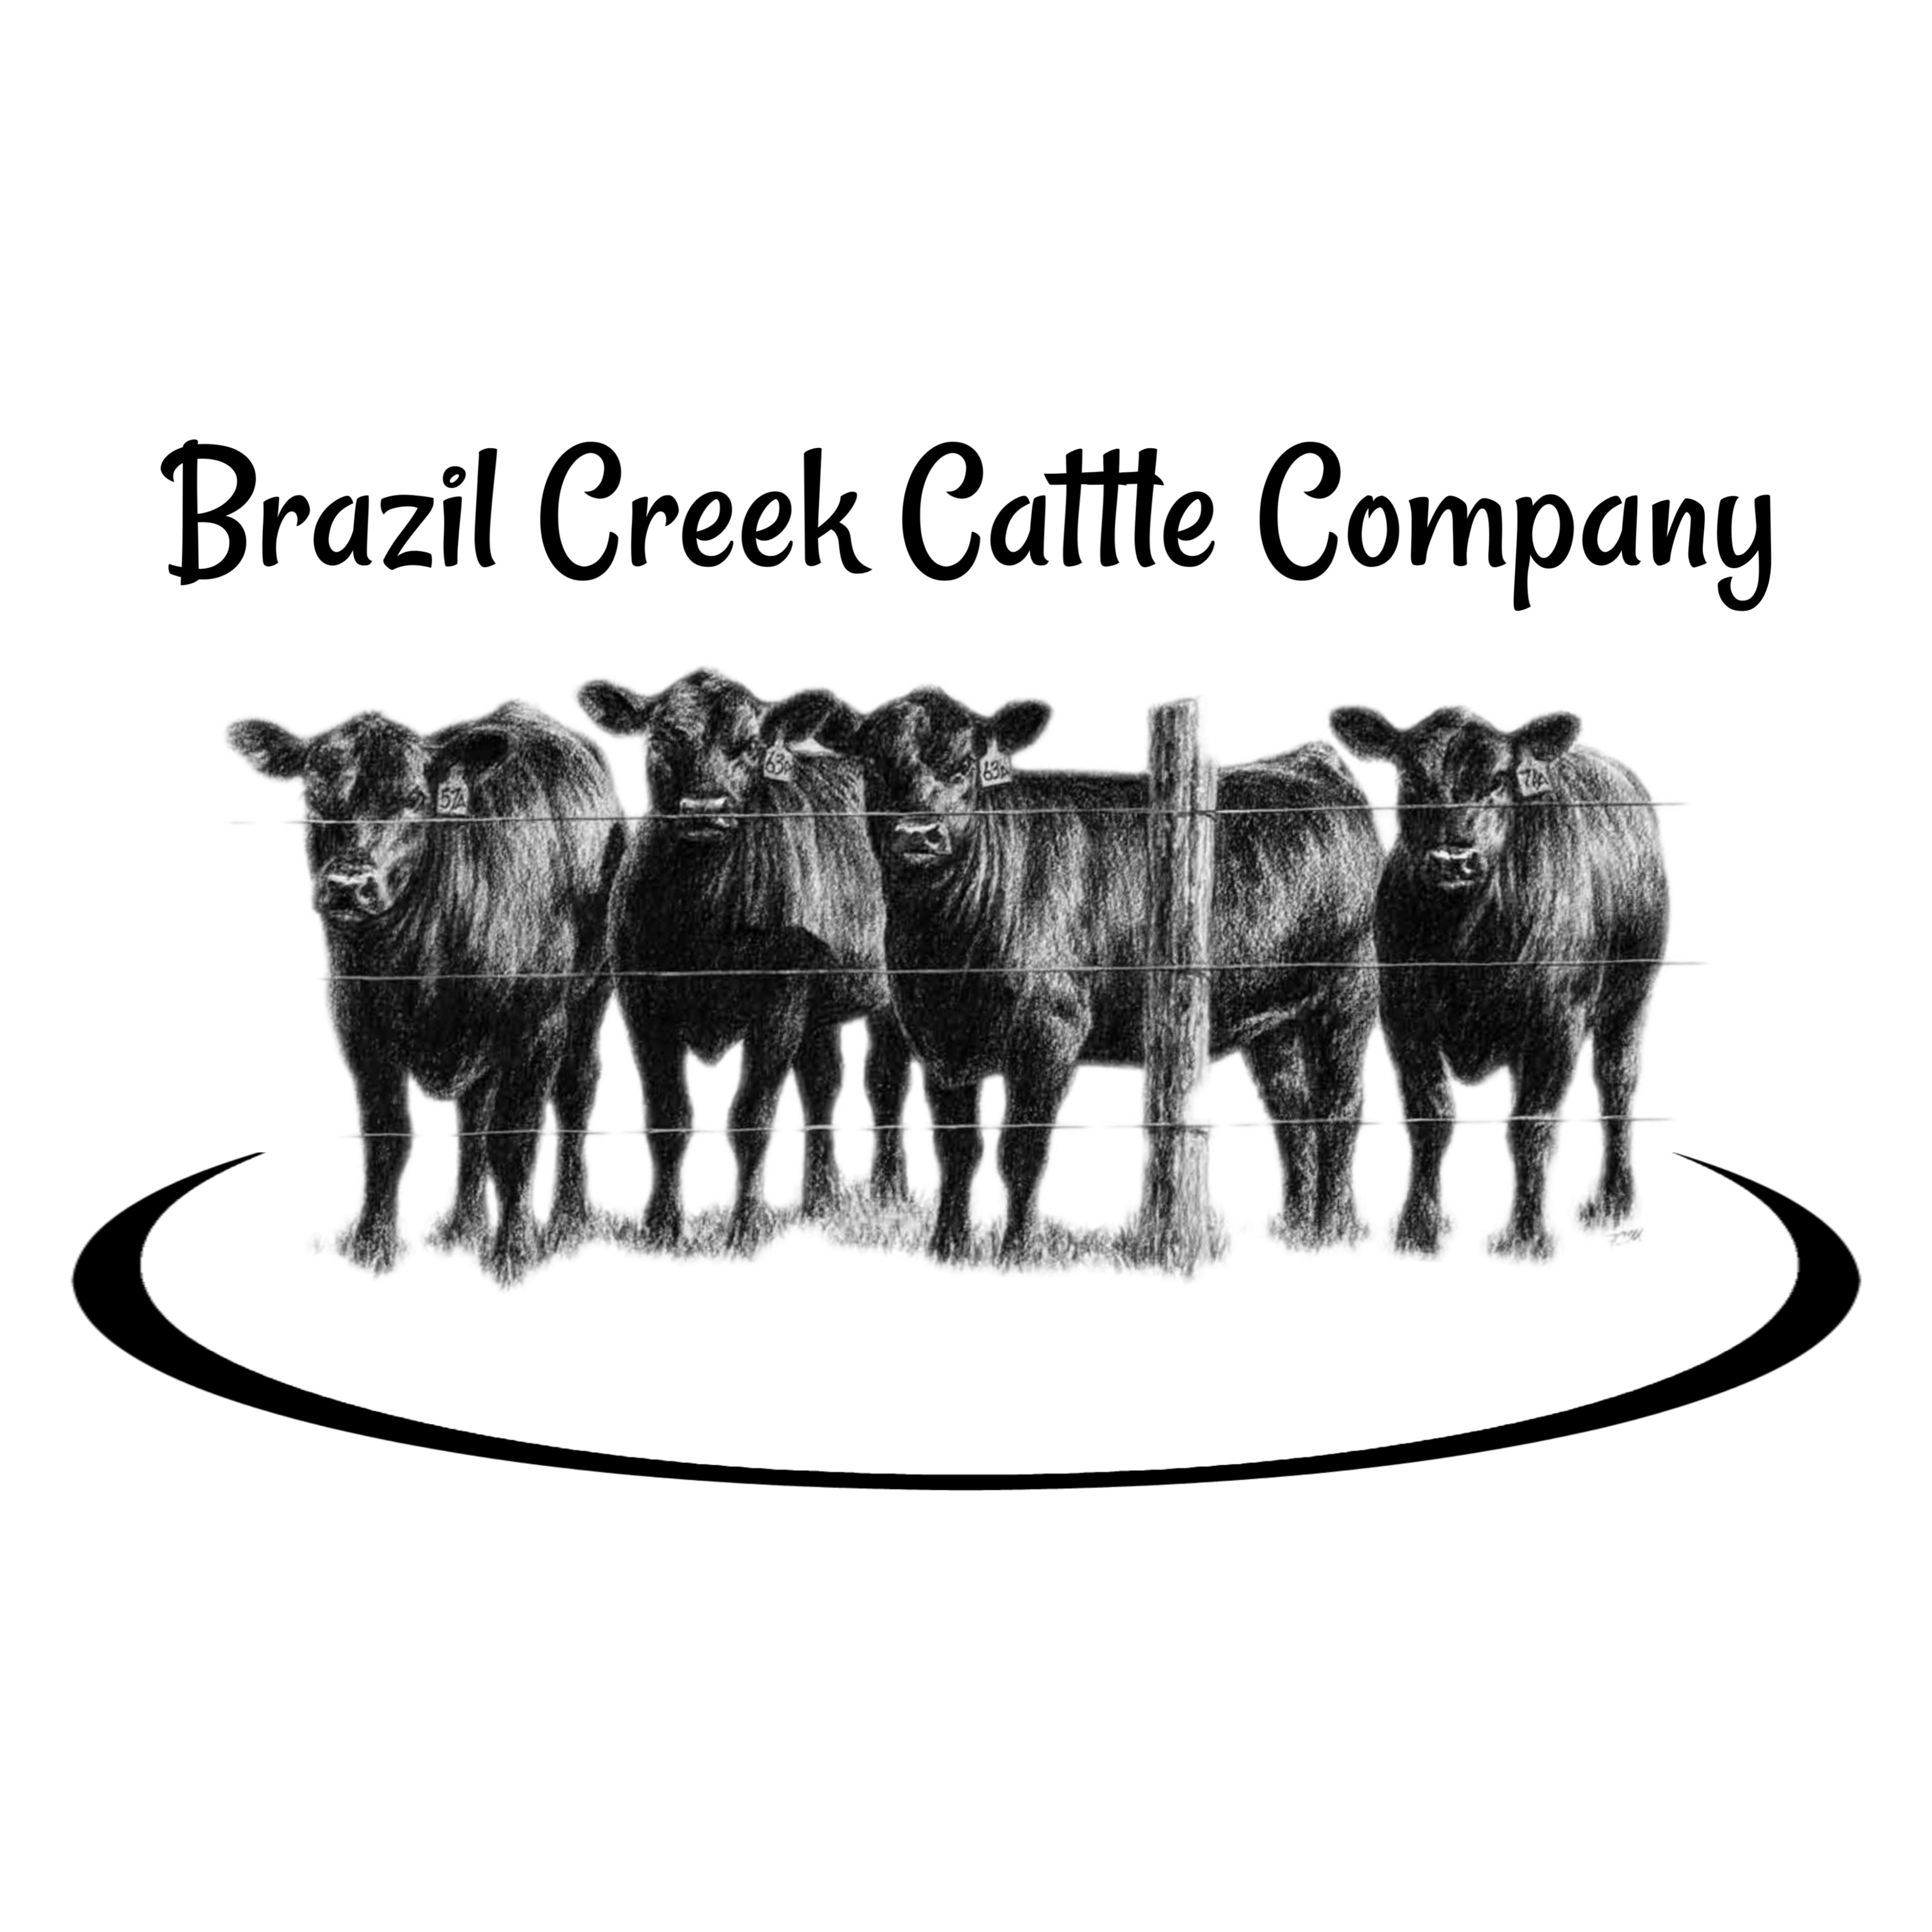 Brazil Creek Cattle Company